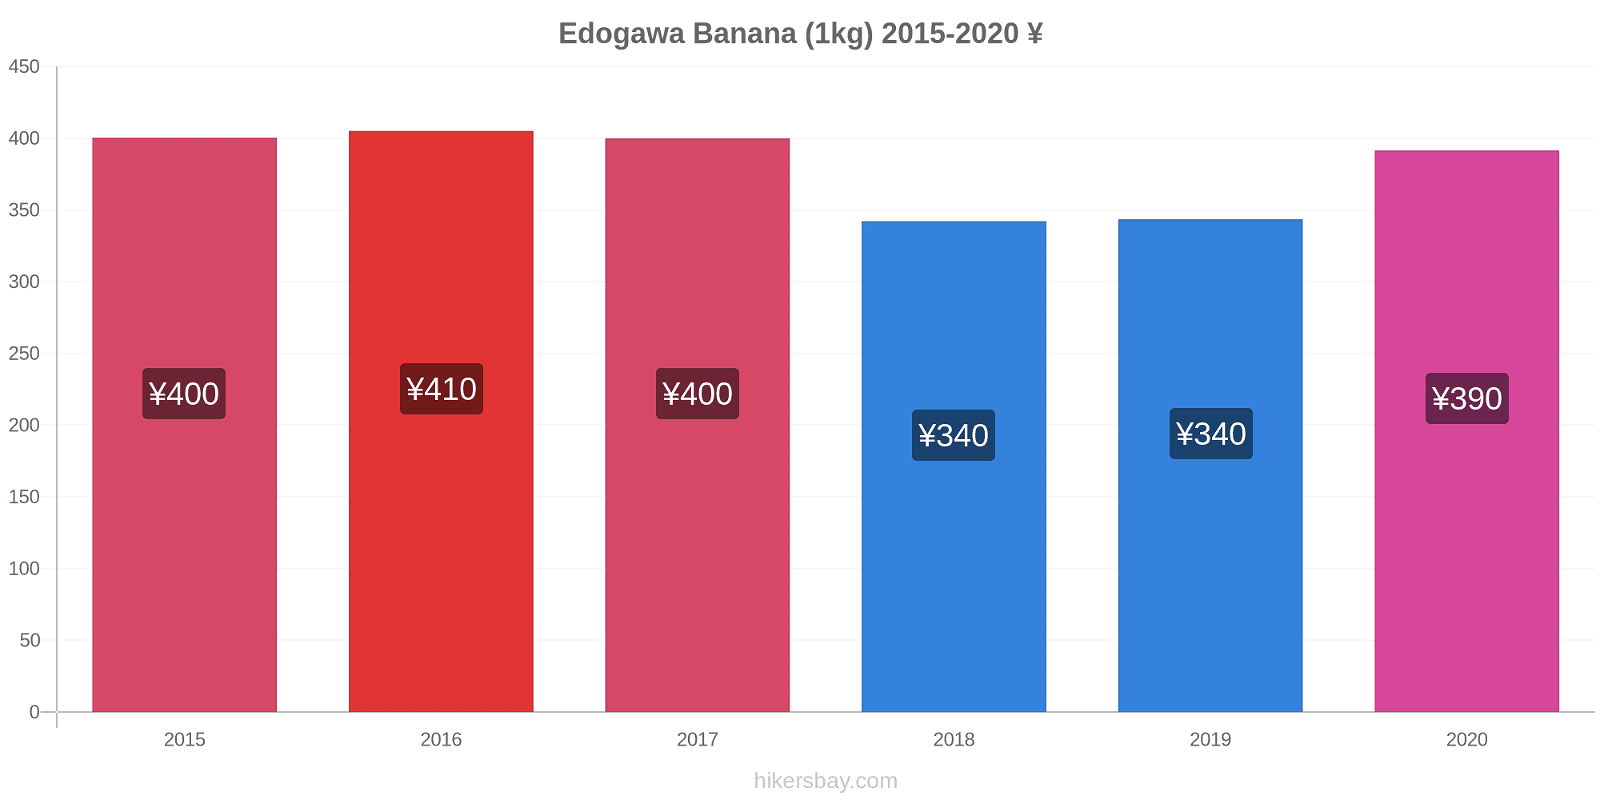 Edogawa modificări de preț Banana (1kg) hikersbay.com